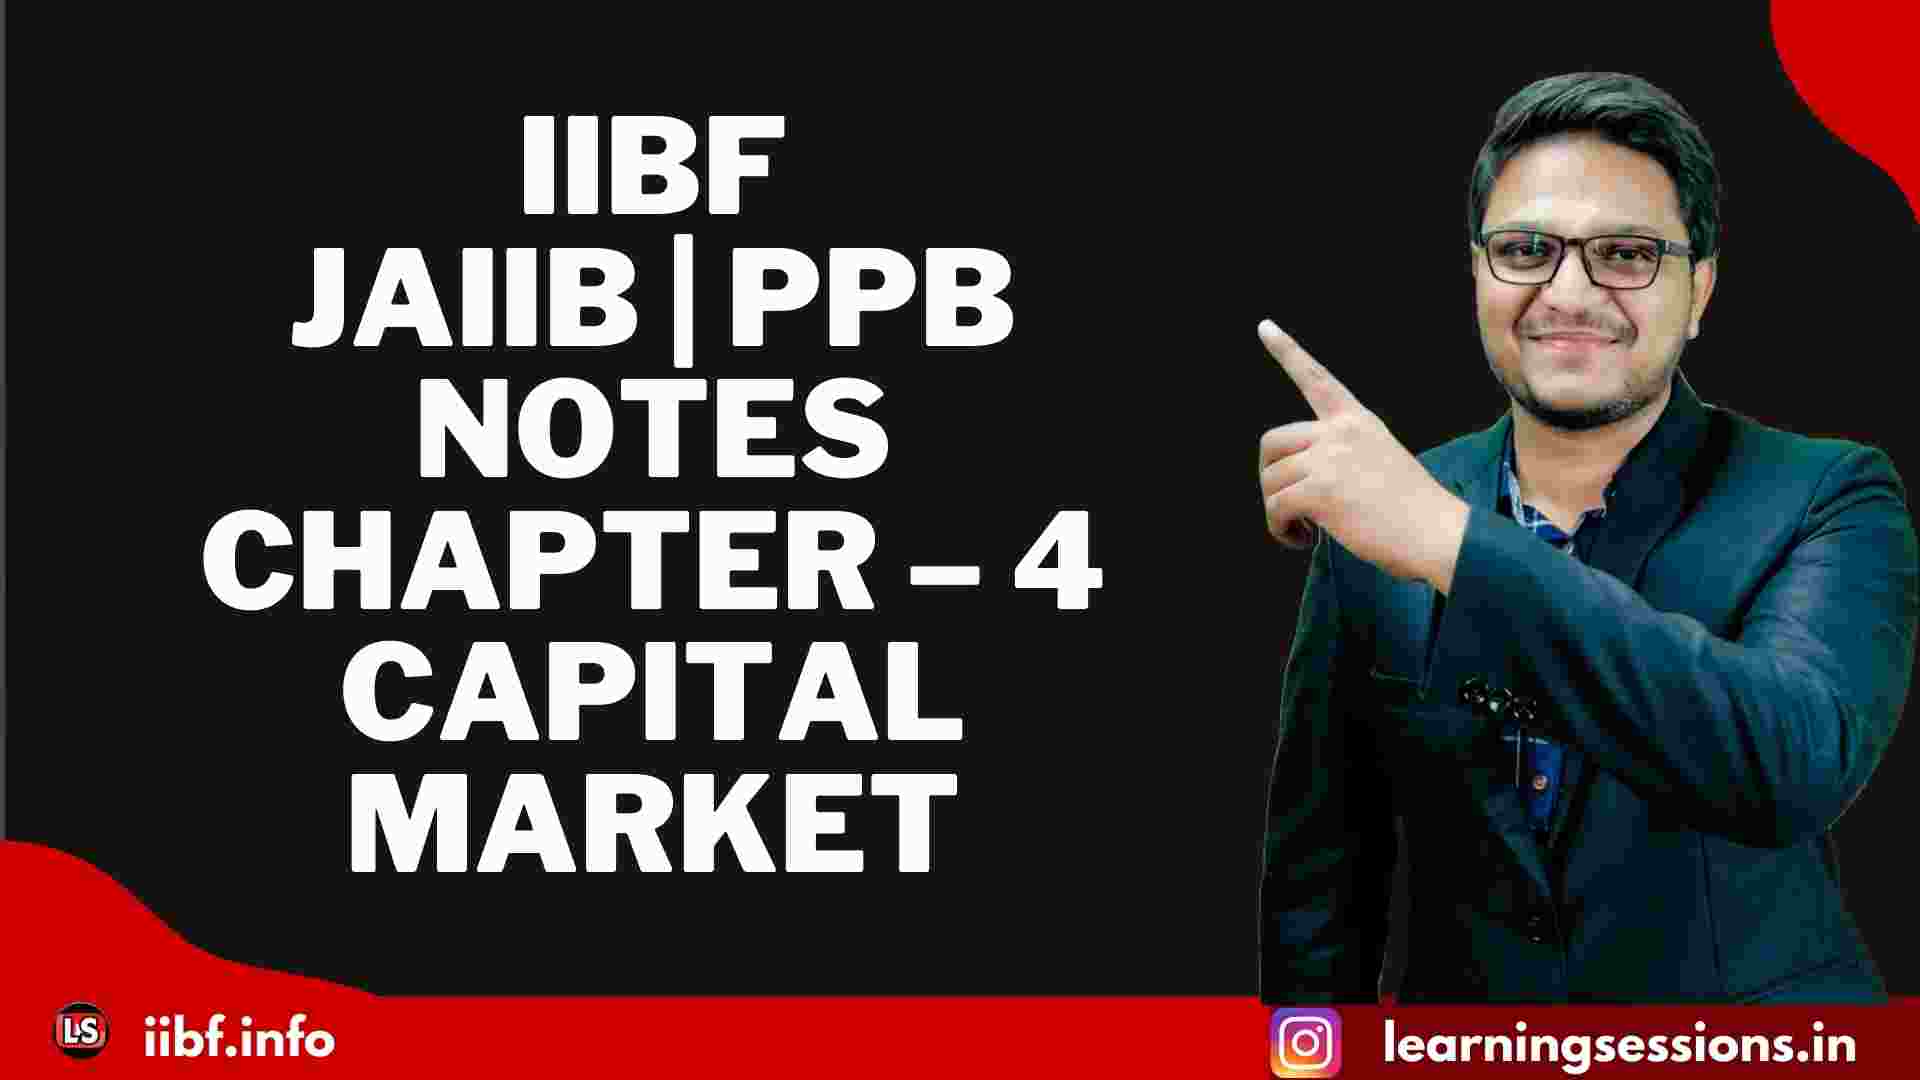 IIBF | JAIIB | PPB NOTES CHAPTER – 4: CAPITAL MARKET